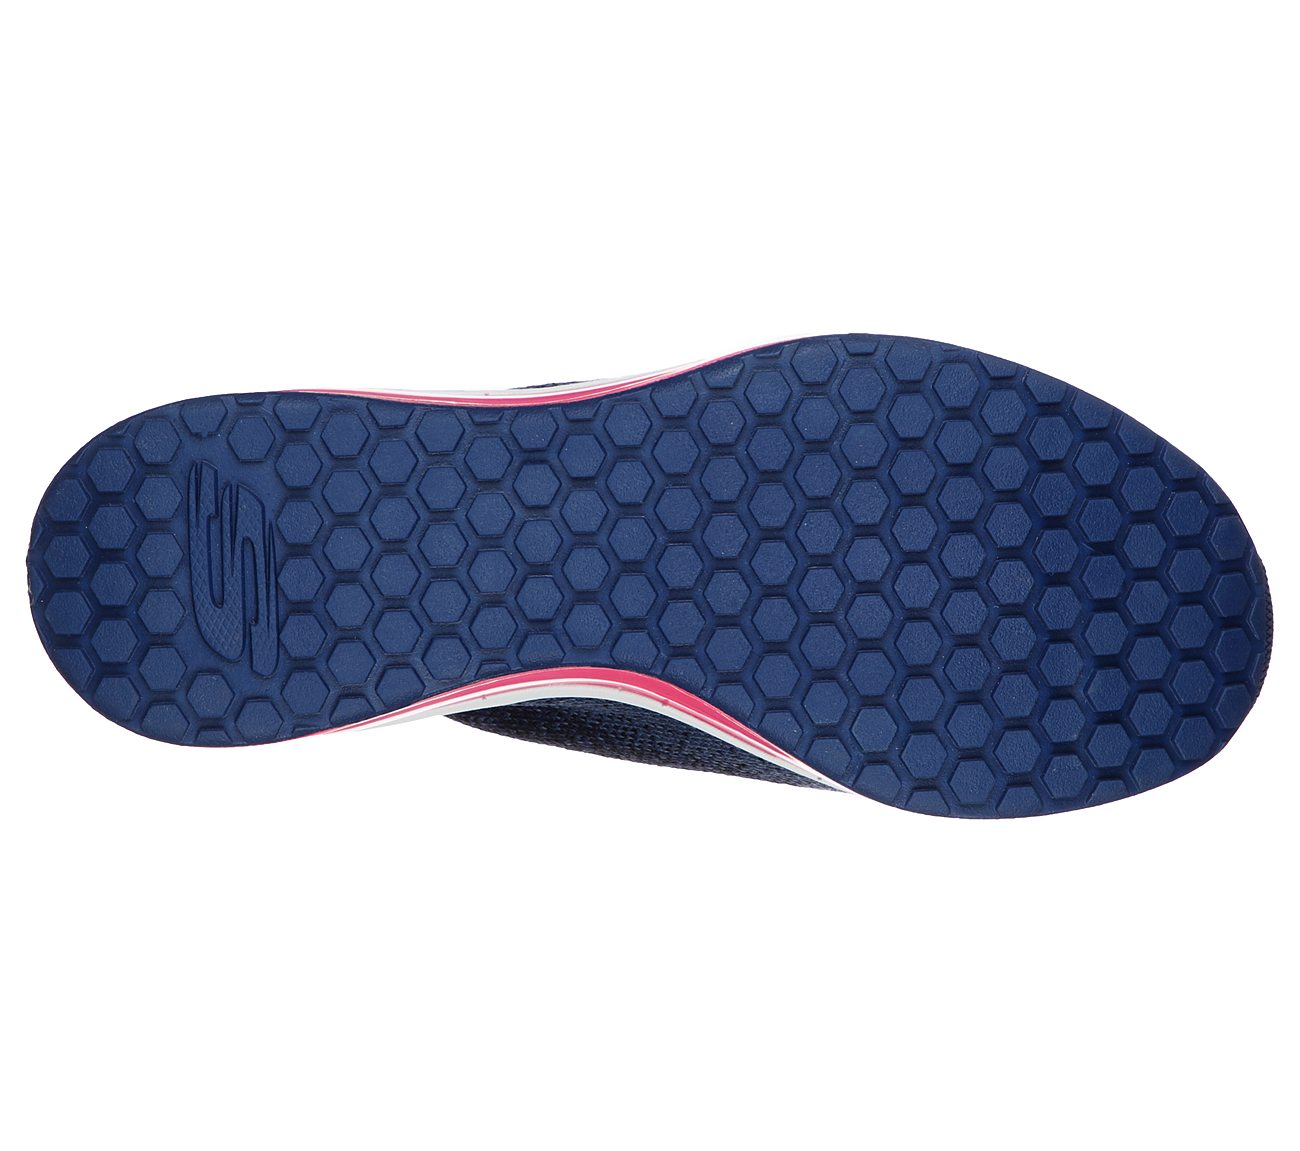 SKECH-AIR ELEMENT-BRISK MOTIO, NAVY/HOT PINK Footwear Bottom View